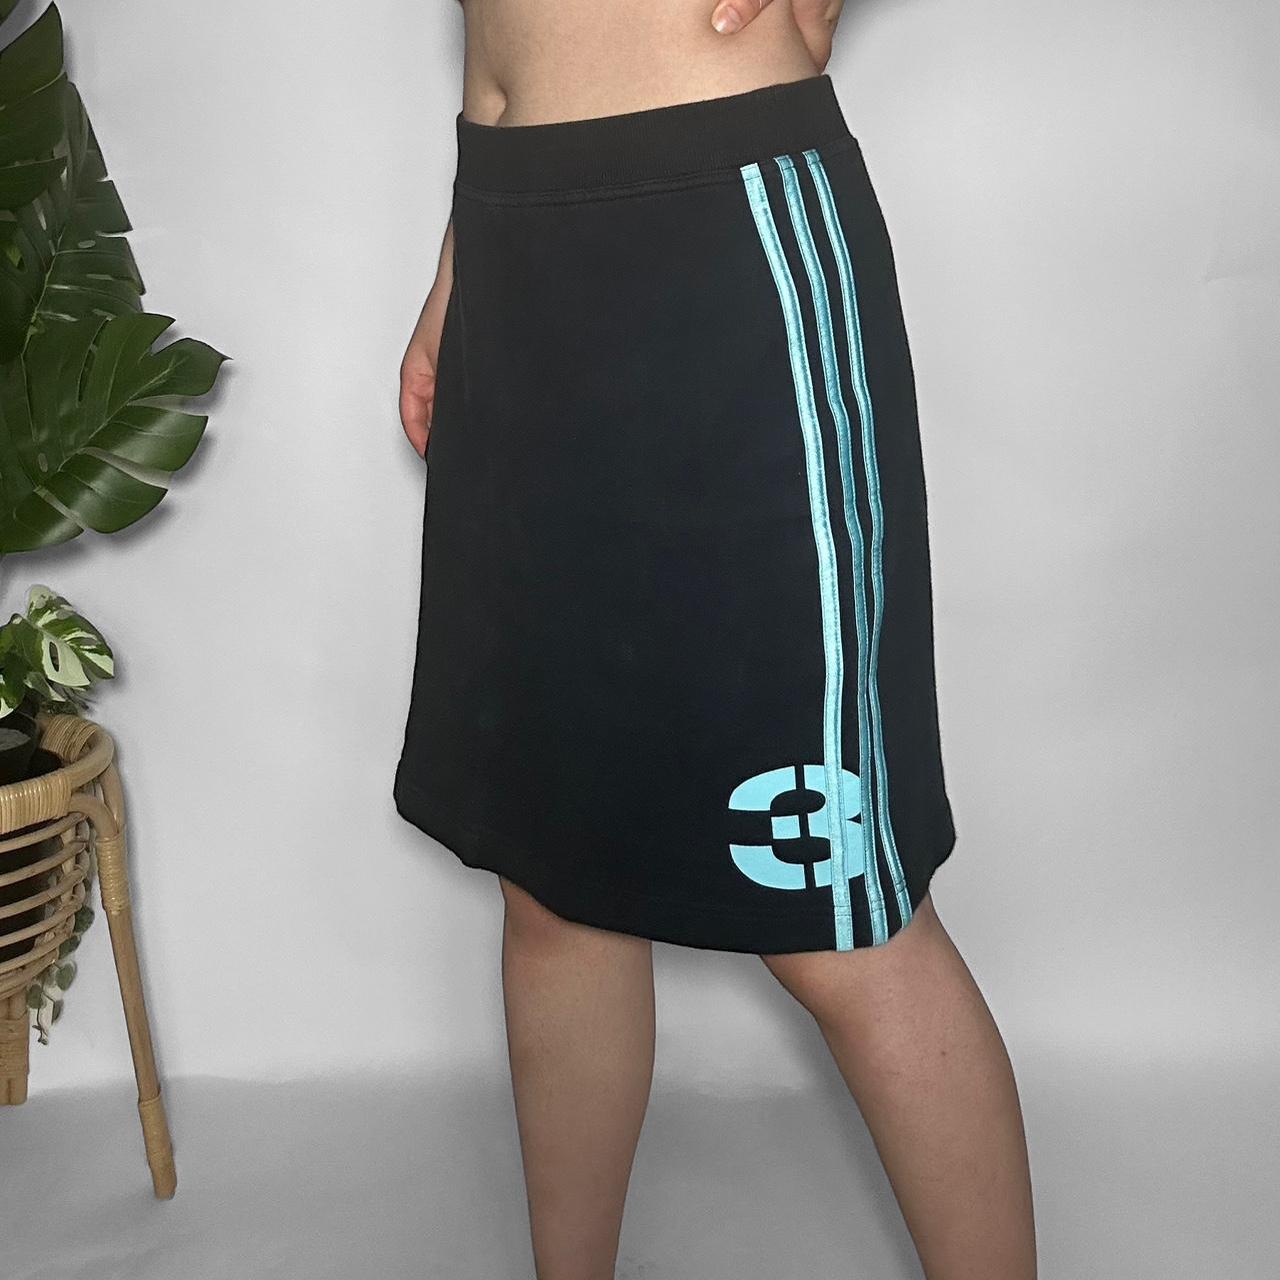 Vintage Adidas y2k knee length skirt in aqua blue and navy